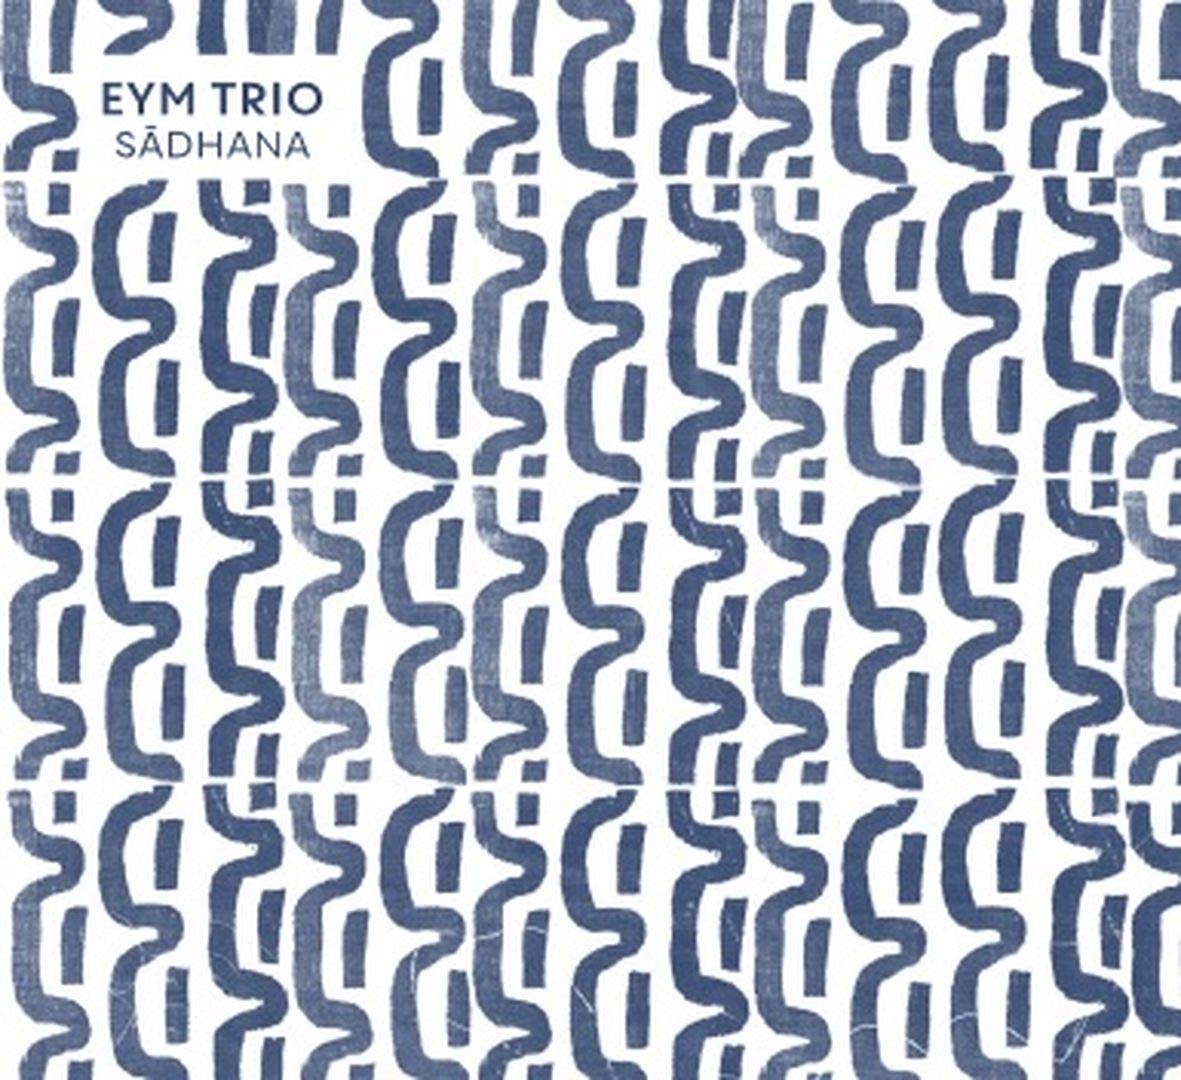 EYM TRIO - Sadhana cover 